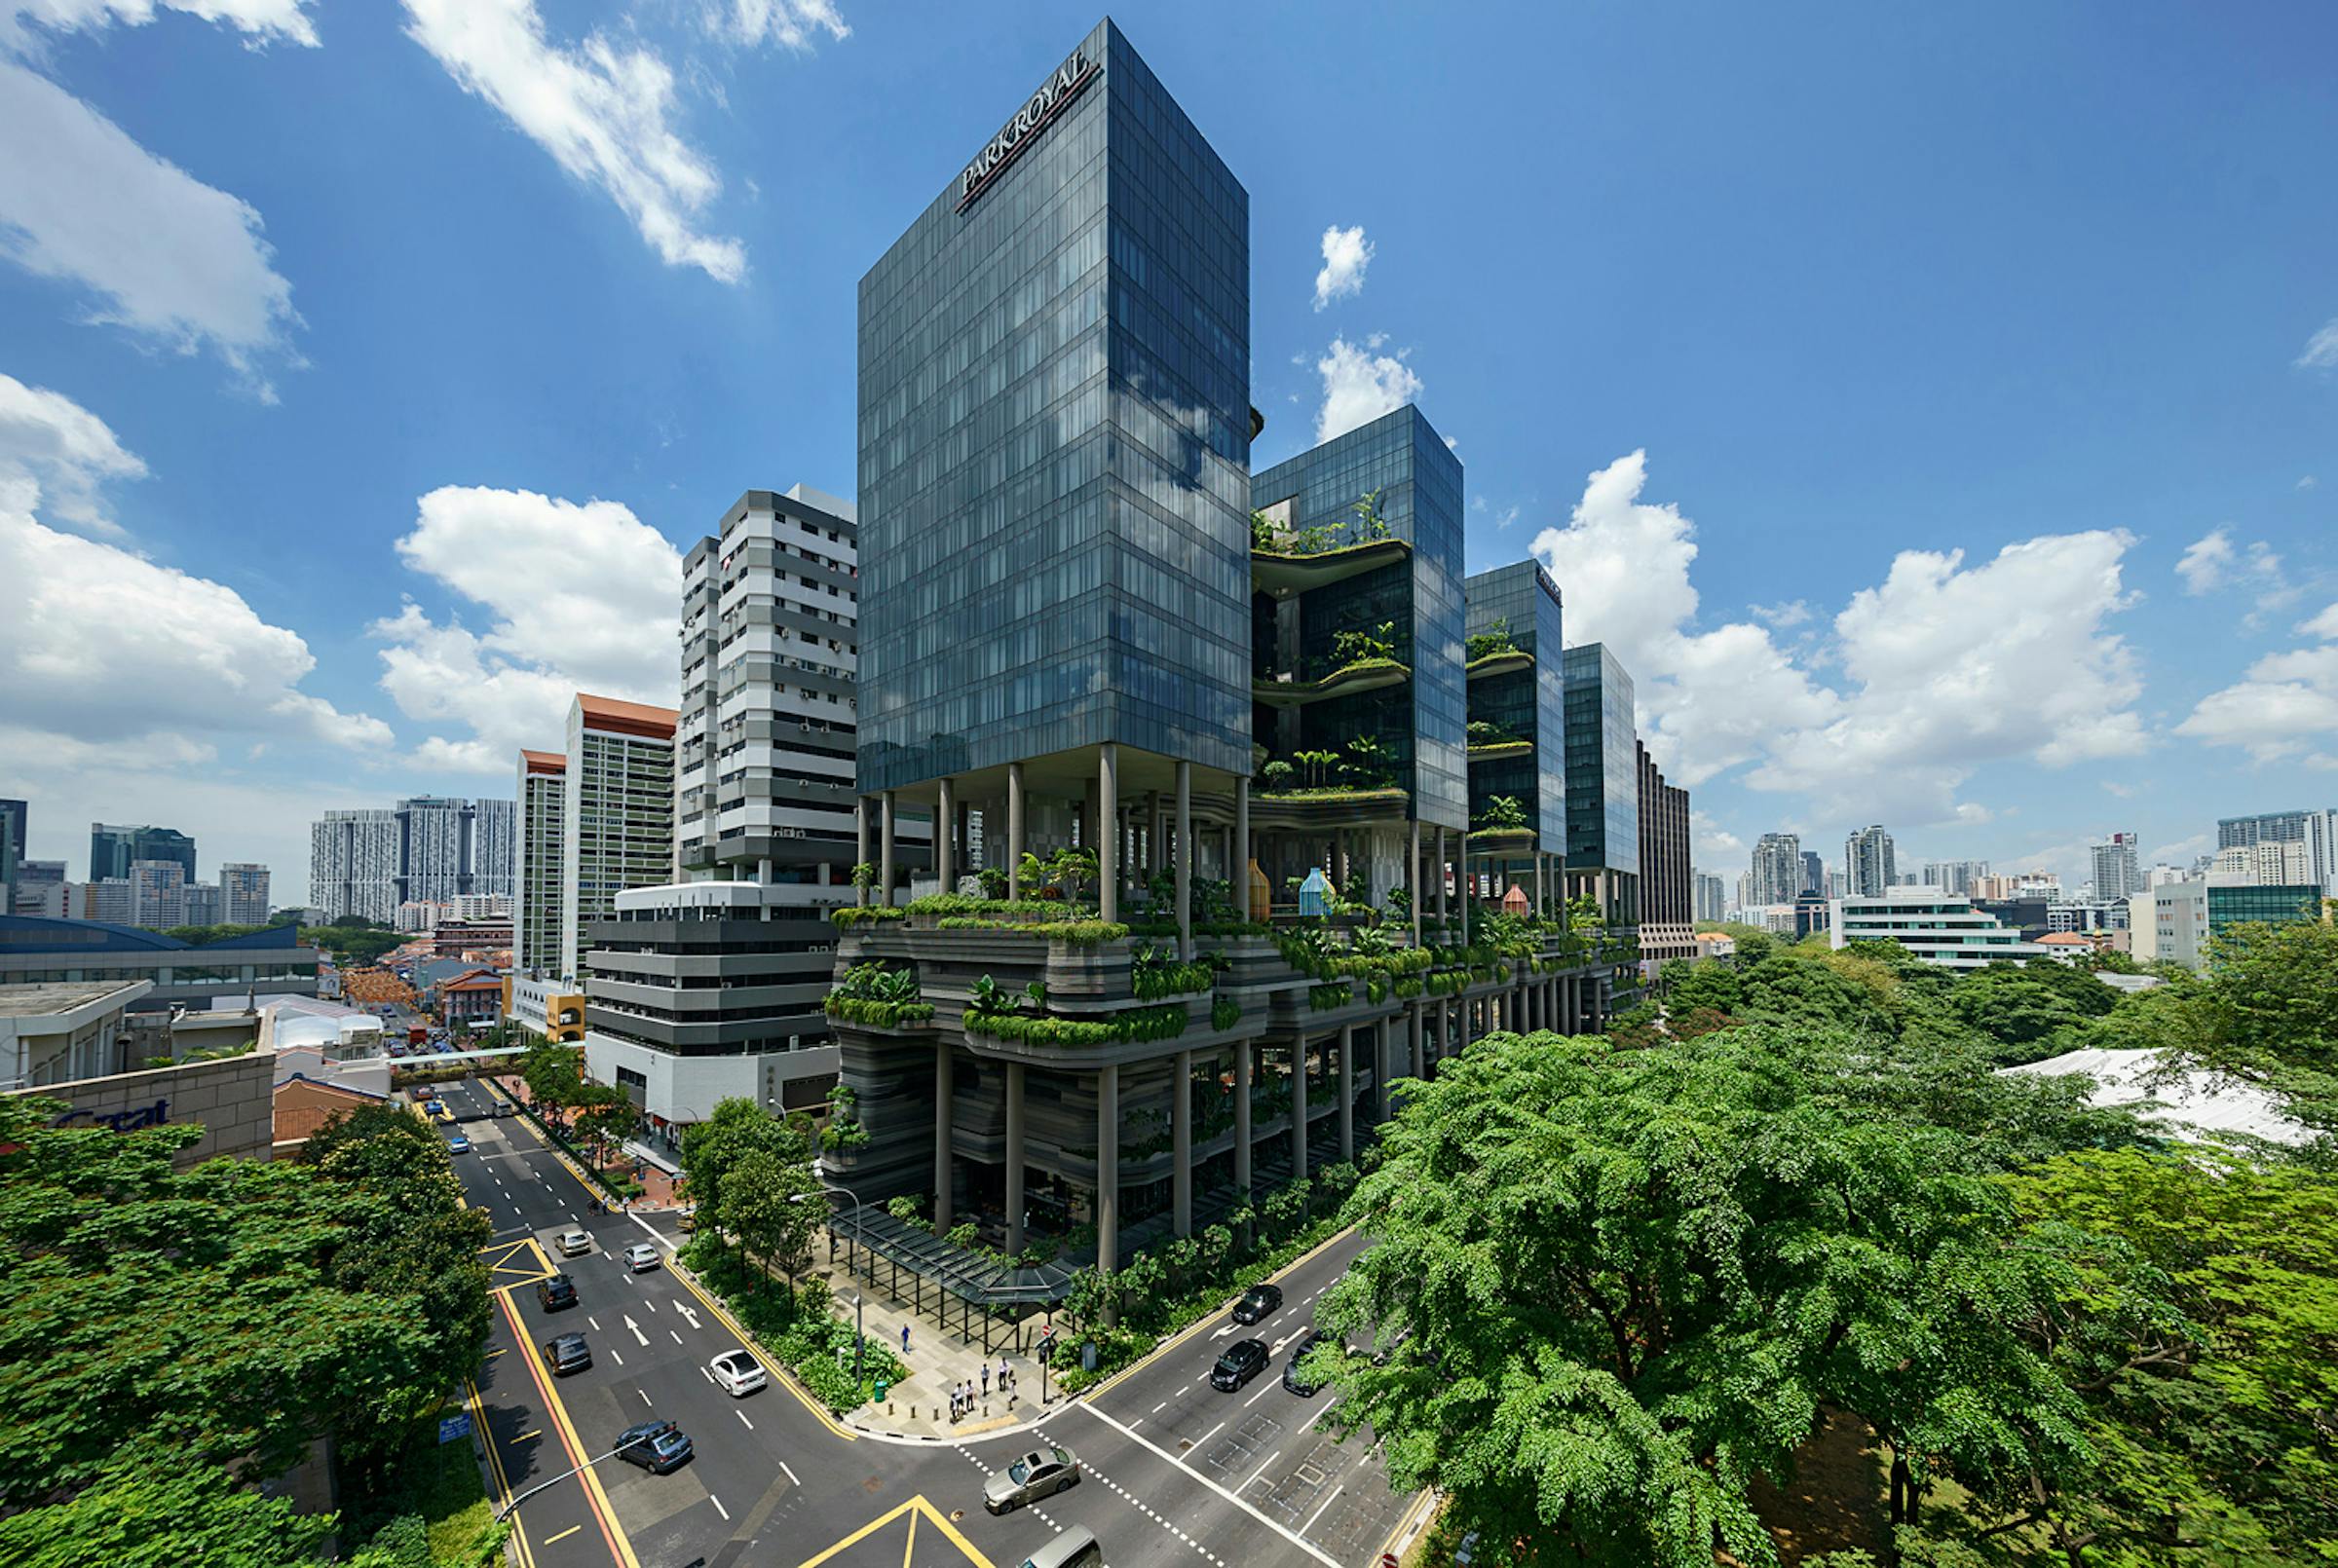 Singapore's PARKROYAL hotel wins CTBUH 2015 Urban Habitat Award winner